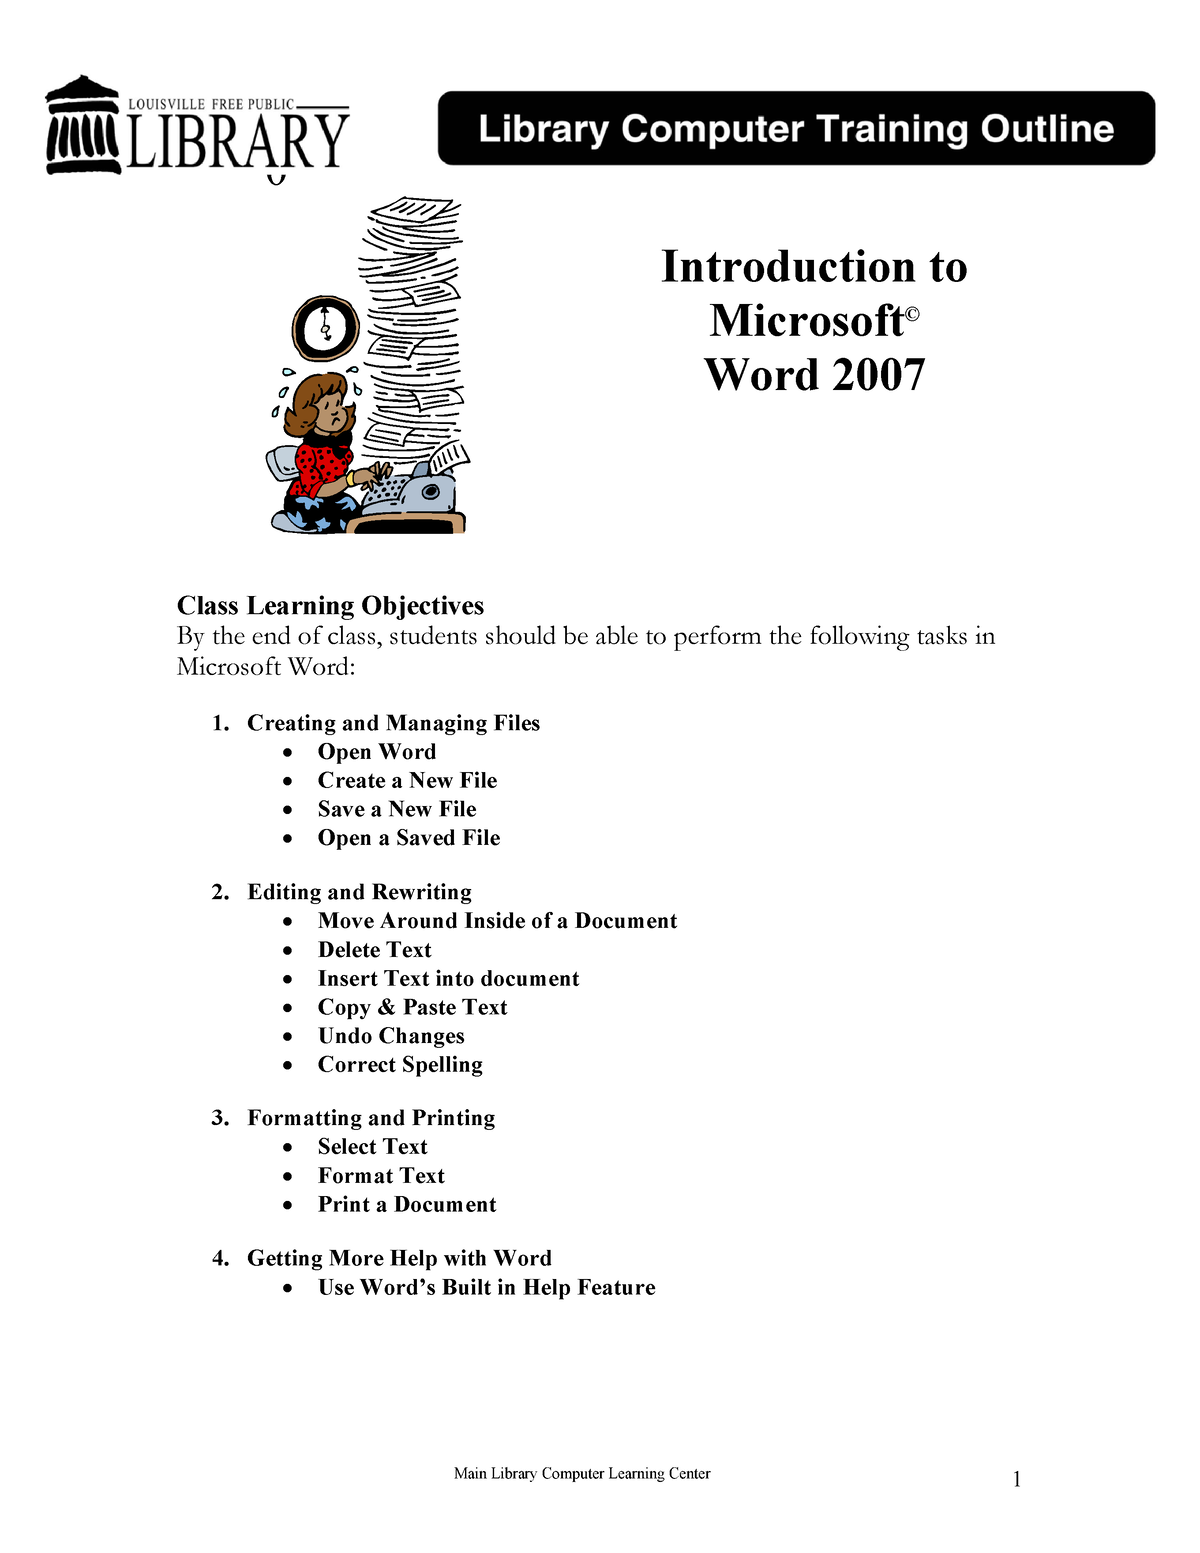 Introduction to Microsoft Word - GeeksforGeeks